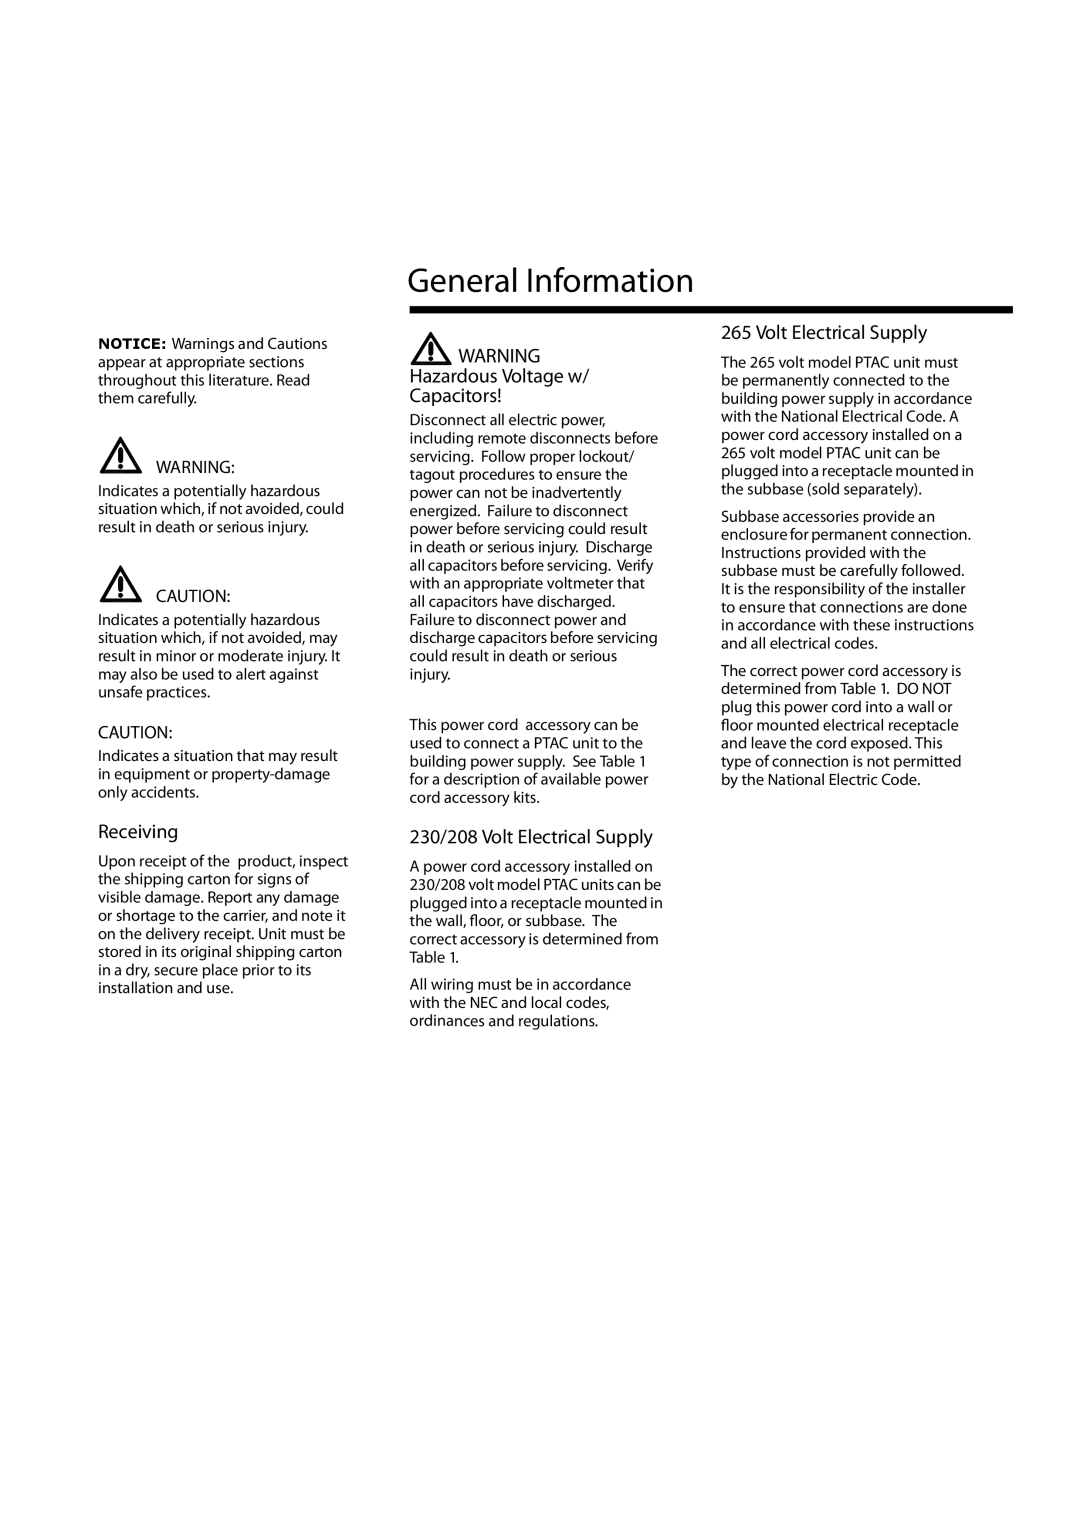 Haier ESA424N manual General Information, Hazardous Voltage w Capacitors, Volt Electrical Supply, Receiving 